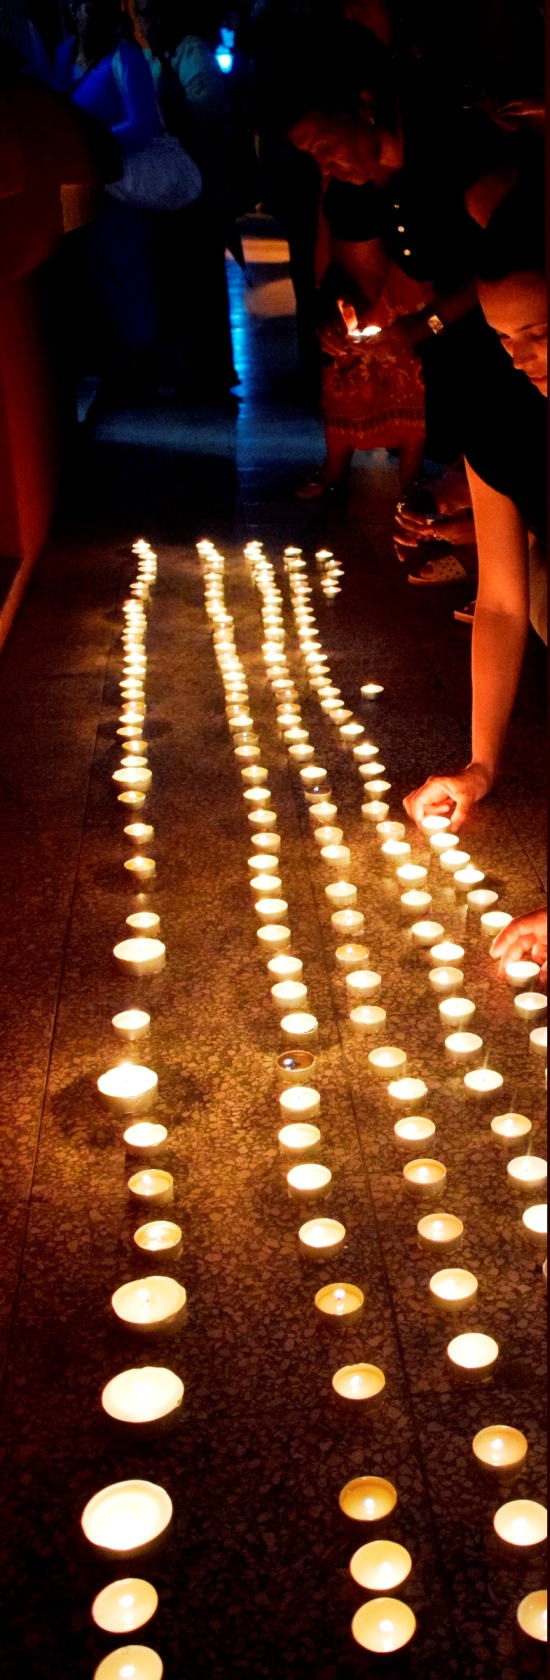 holguin peace candles